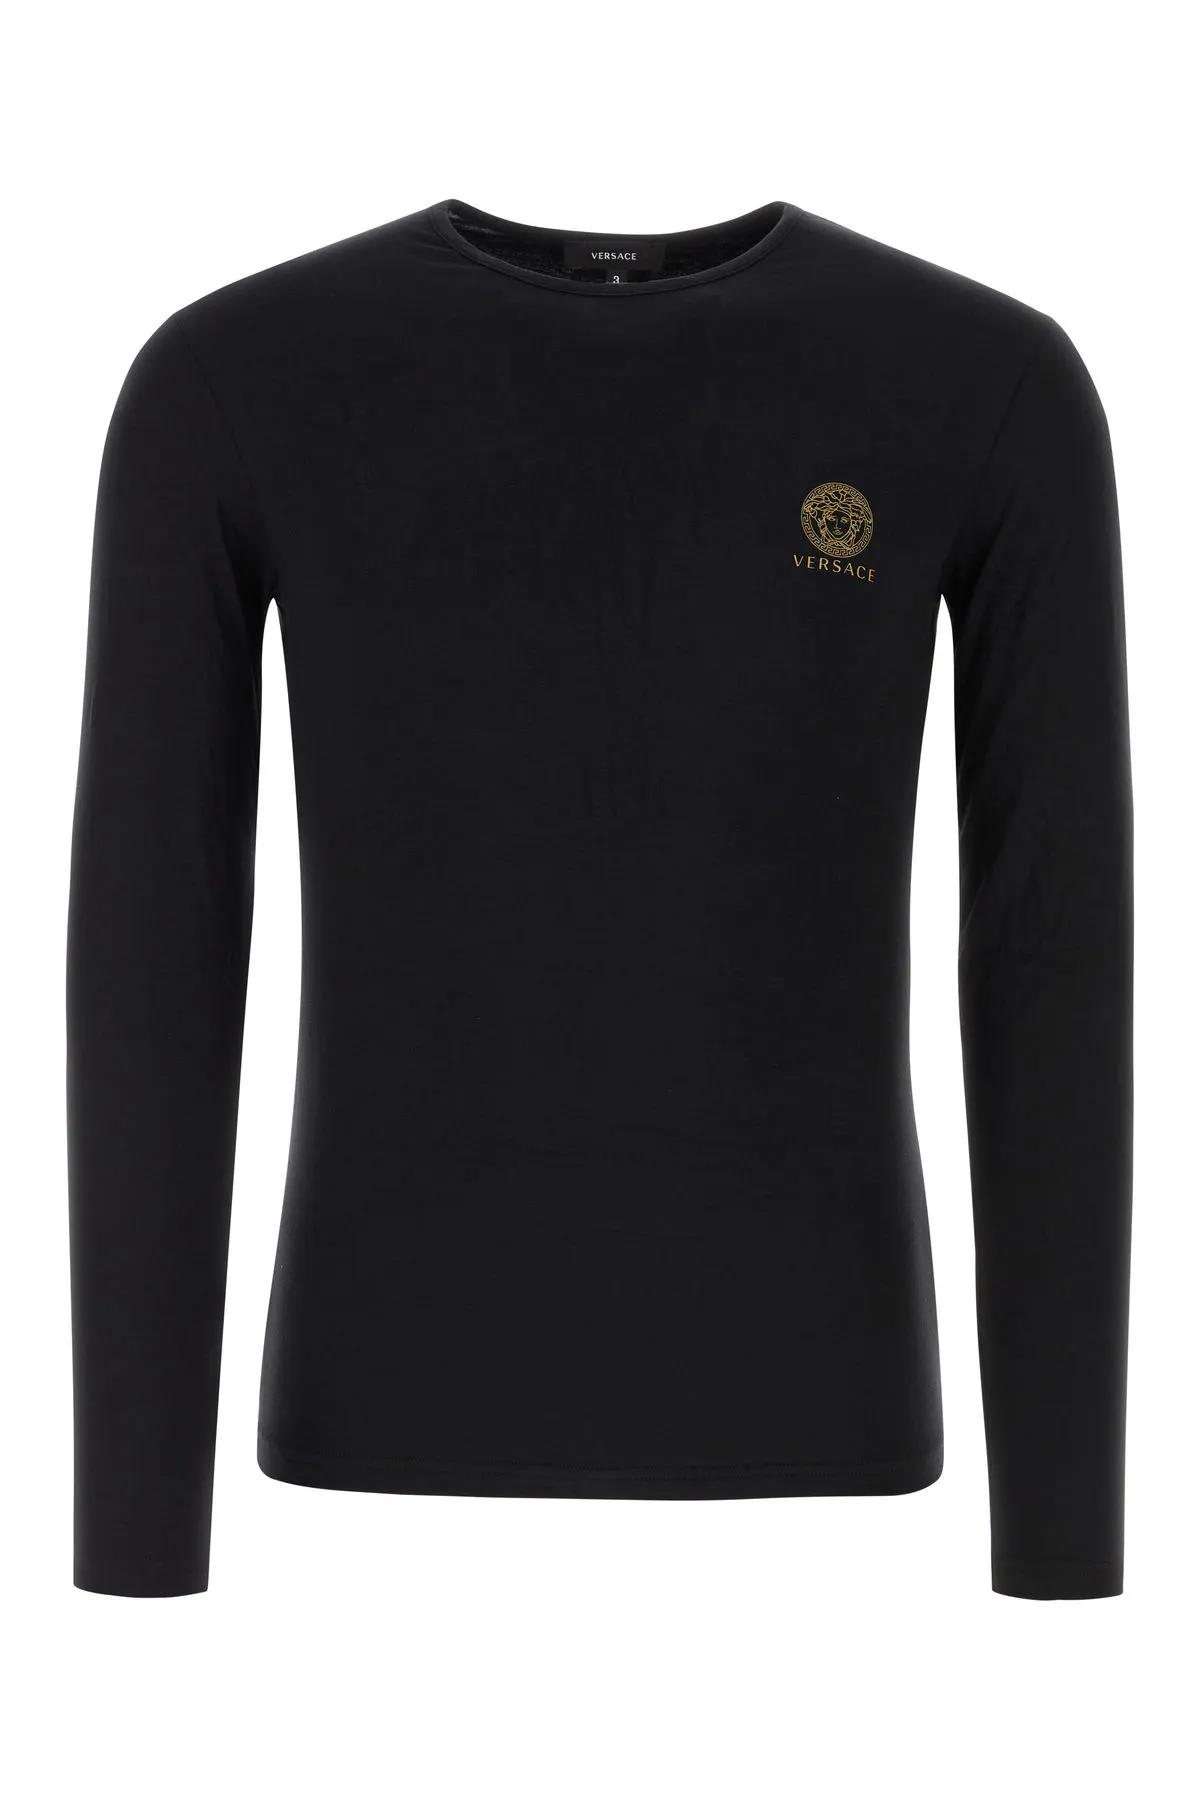 Versace Black Cotton Stretch T-shirt